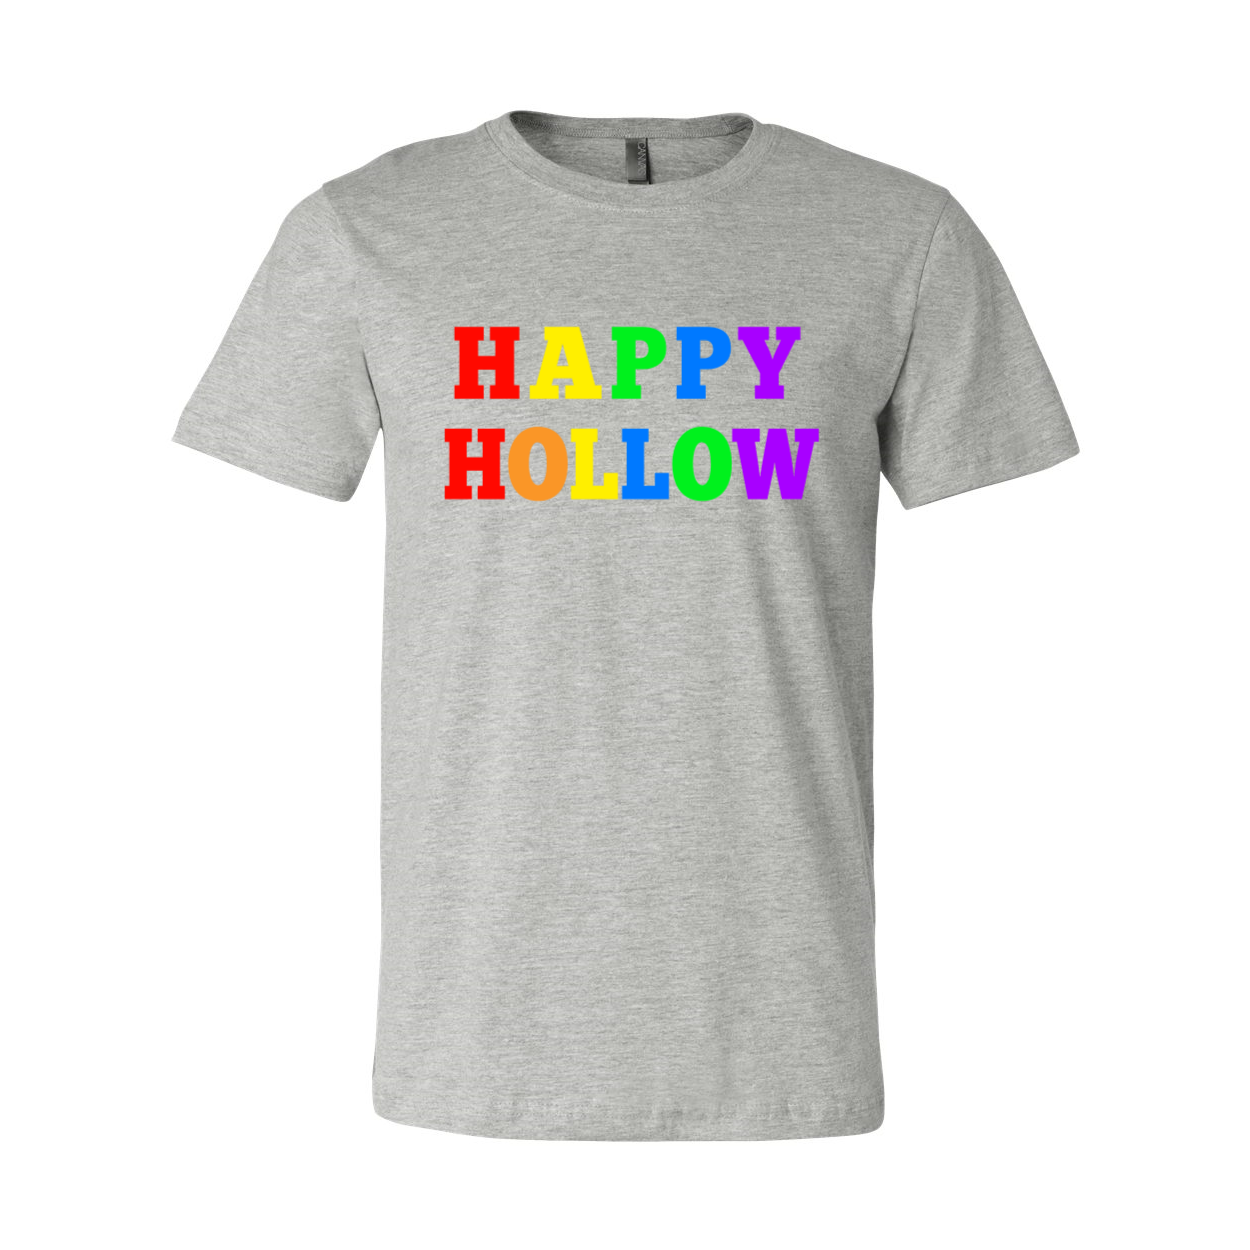 Happy Hollow Rainbow Soft Tee